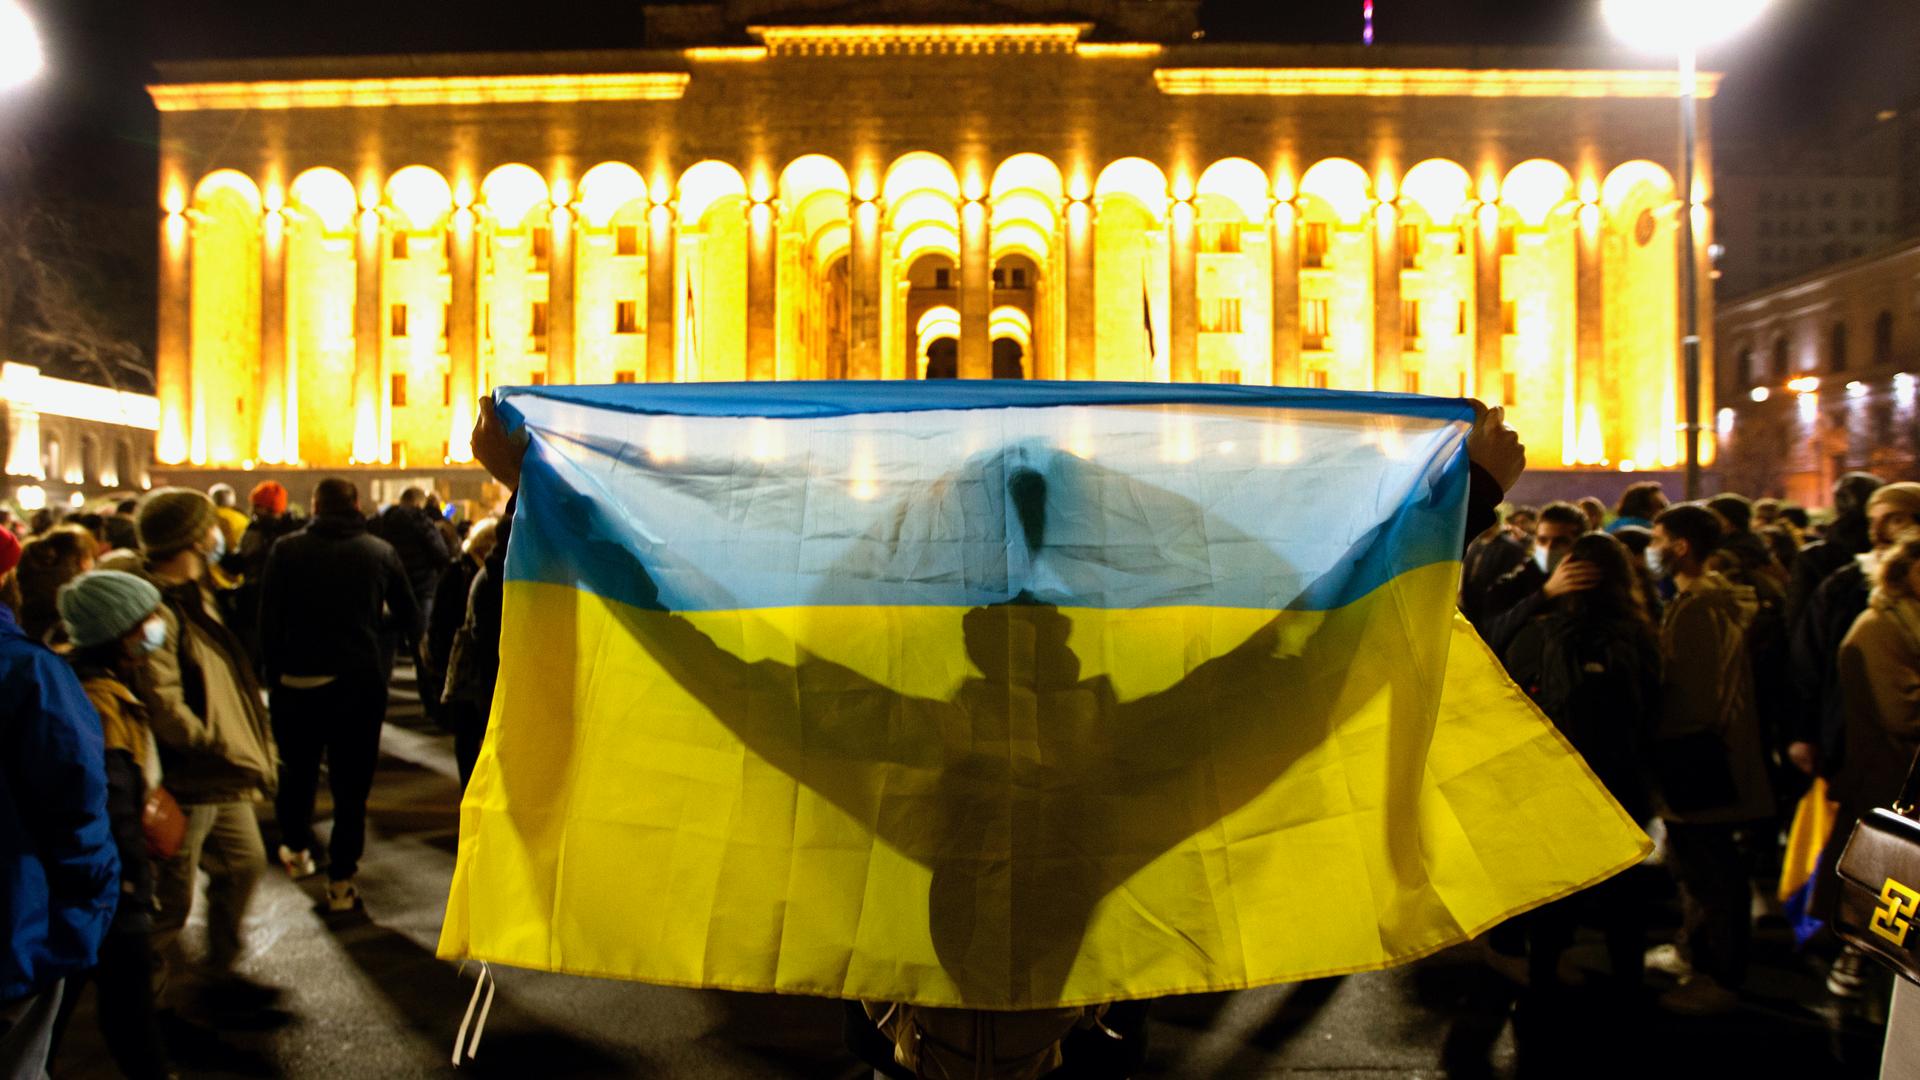 demonstrator holding the Ukraine flag around their body